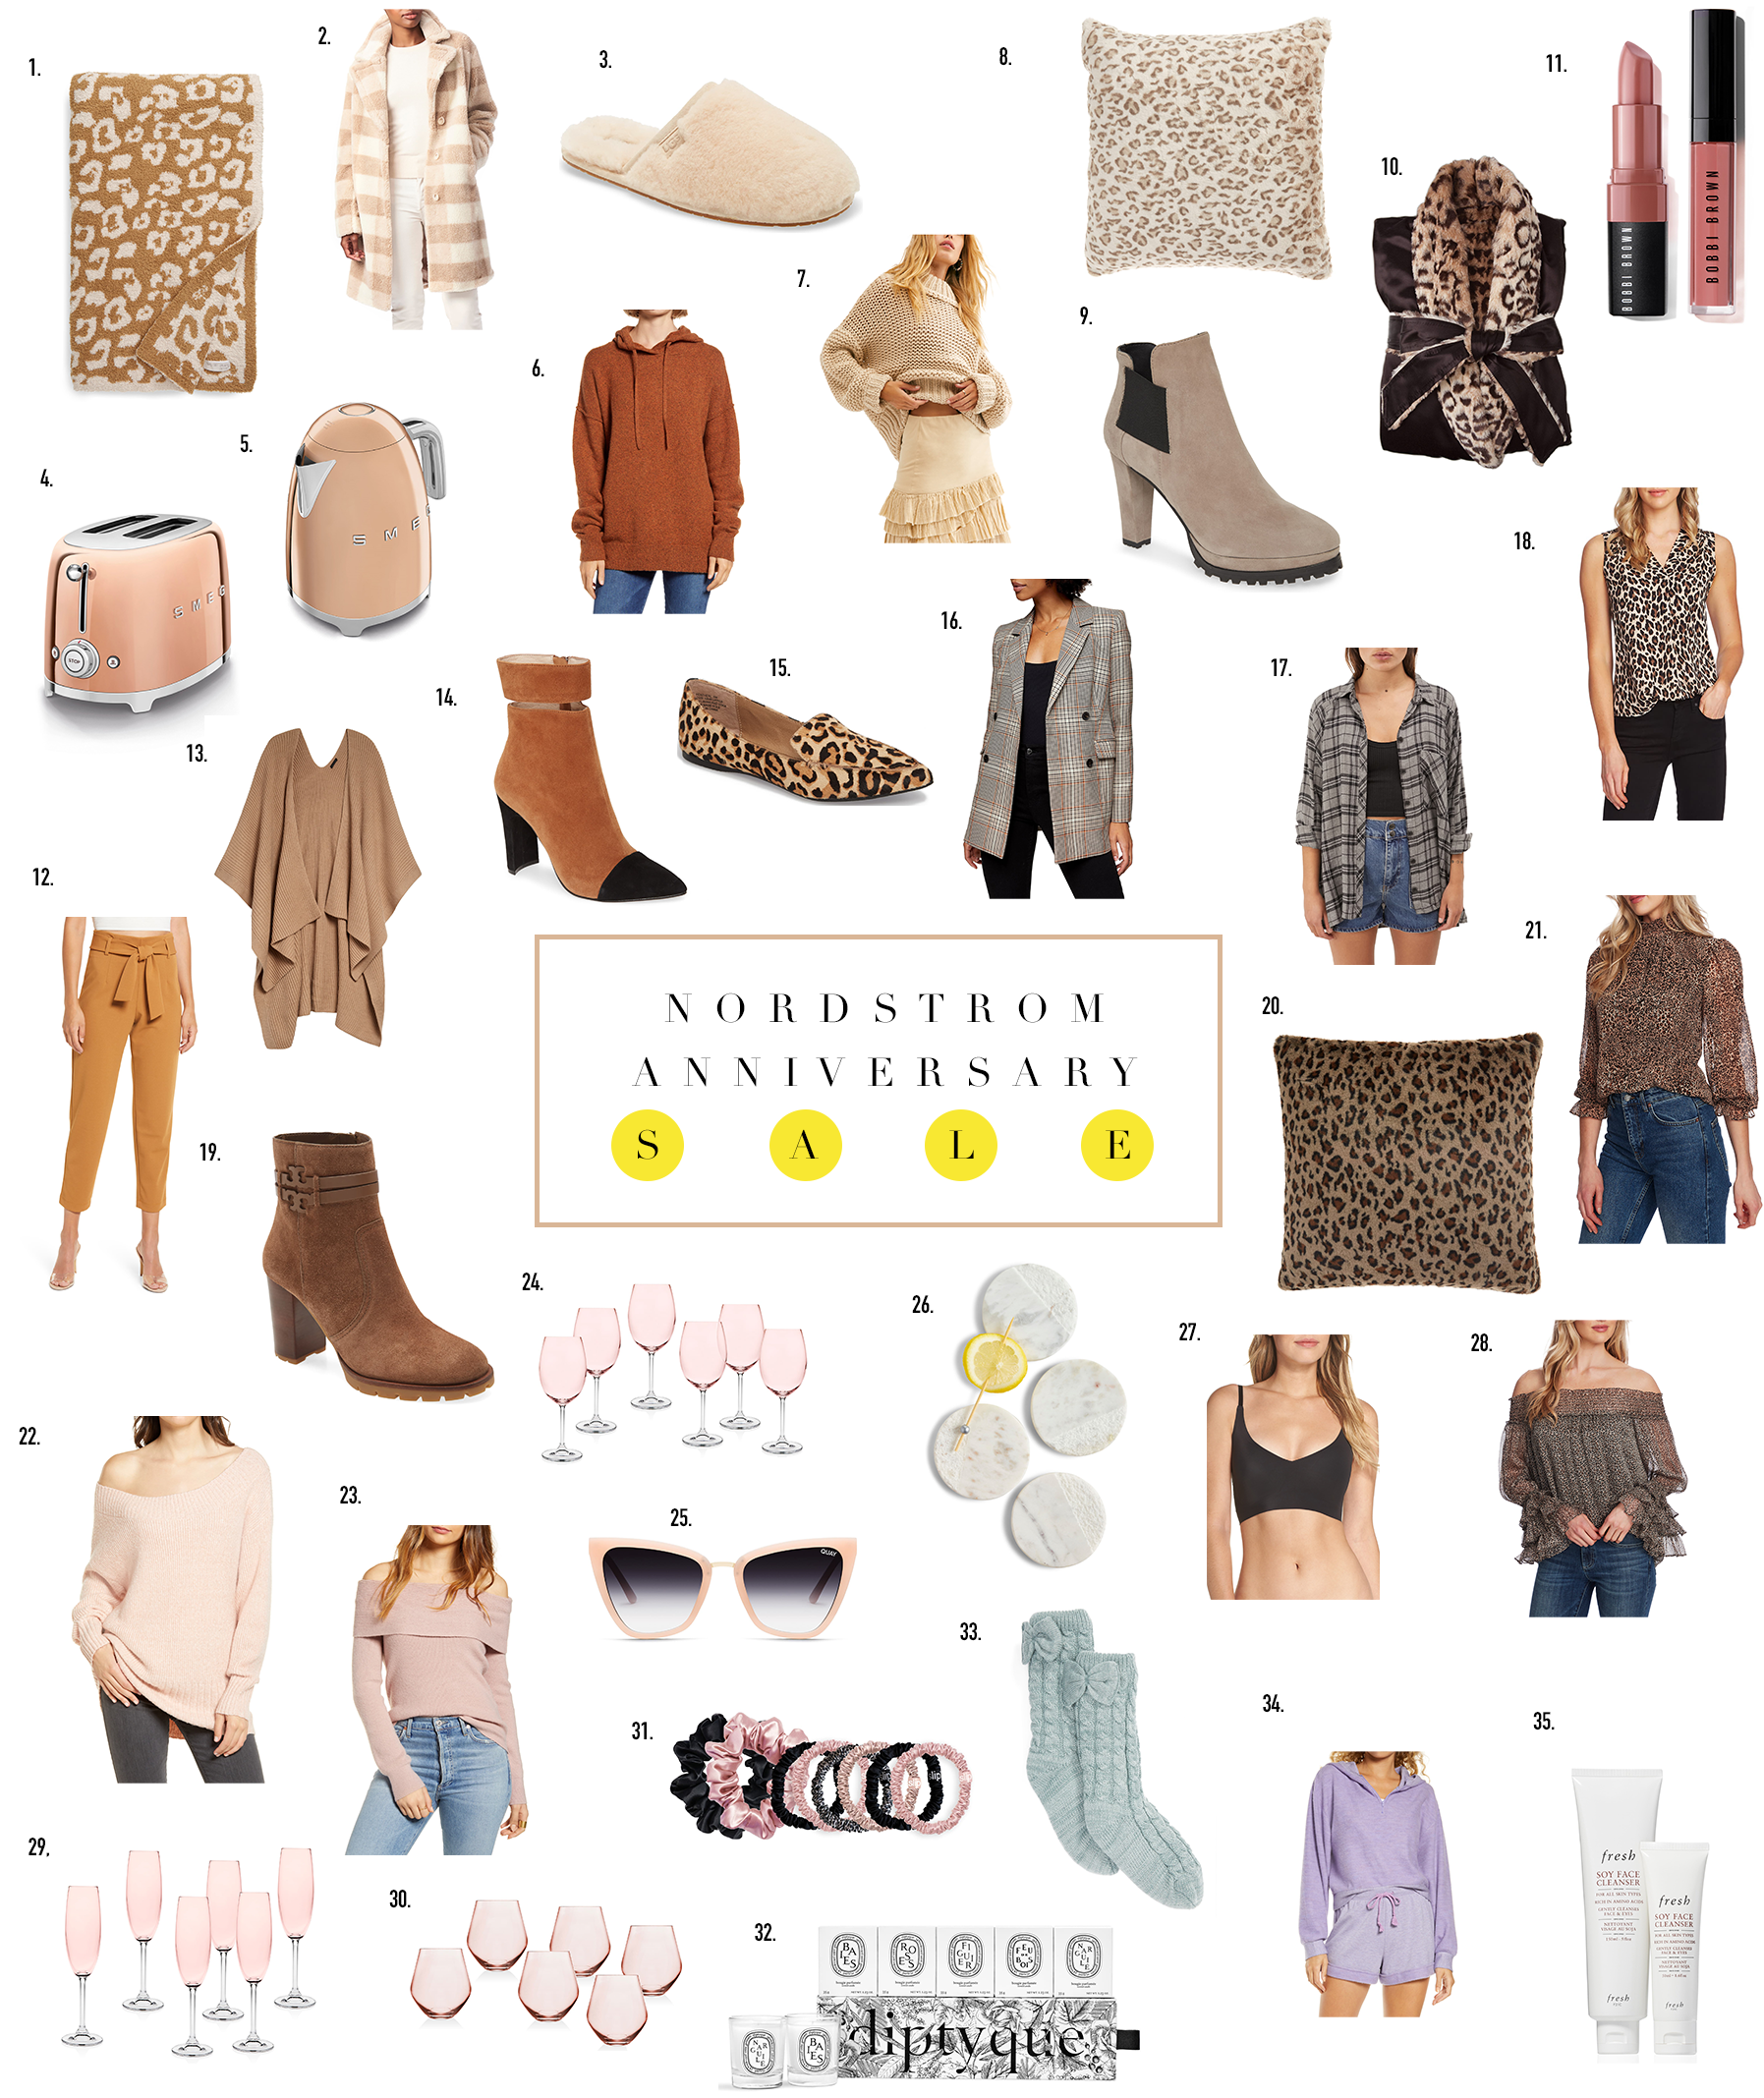 Nordstrom Anniversary Sale 2020 | Shop Online | Blondie in the City by Hayley Larue